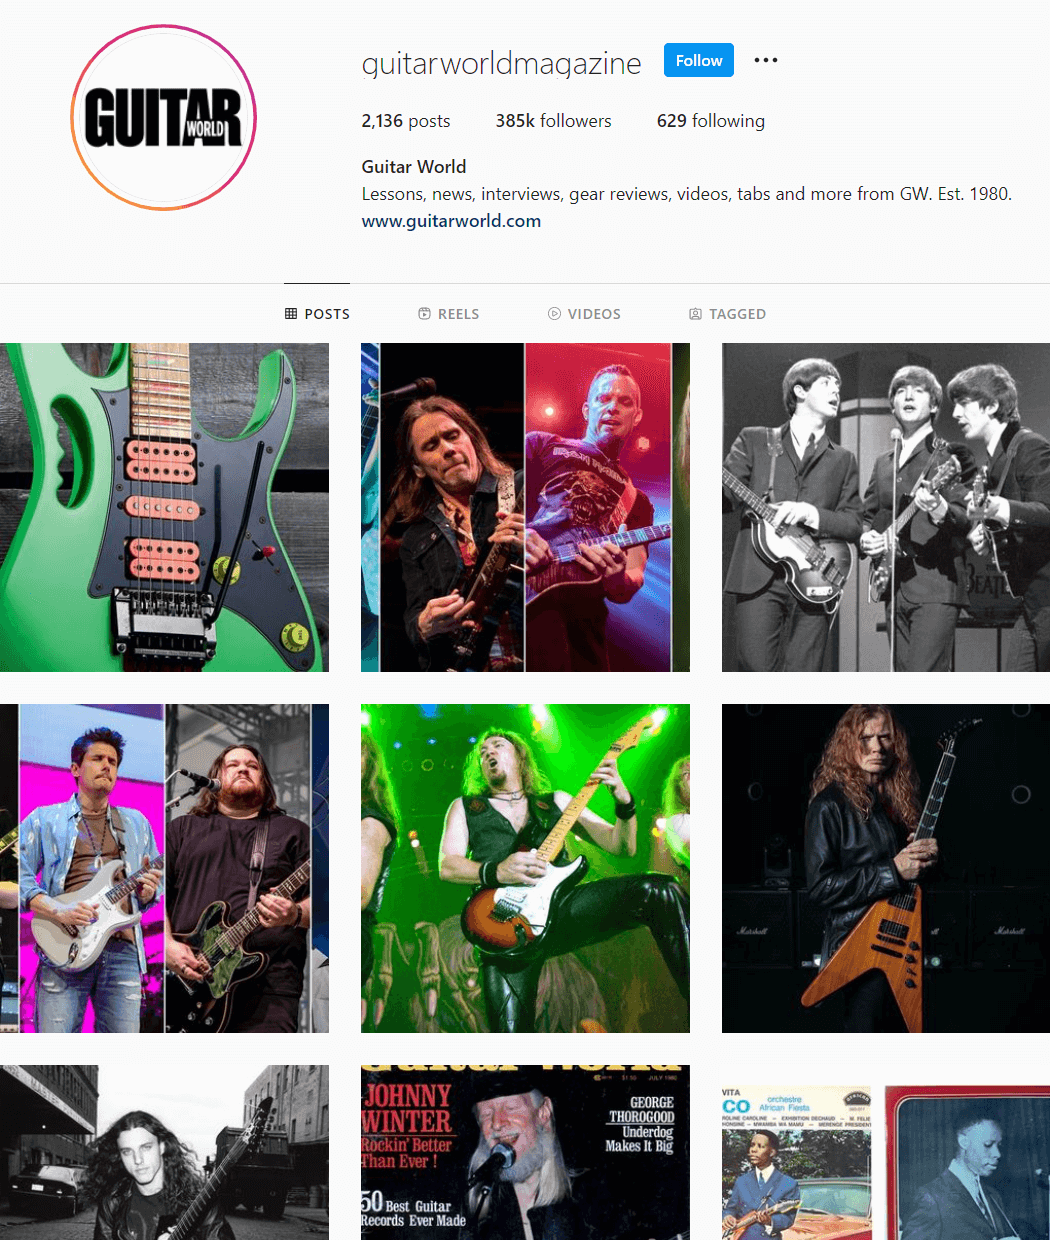 guitarworldmagazine Instagram page